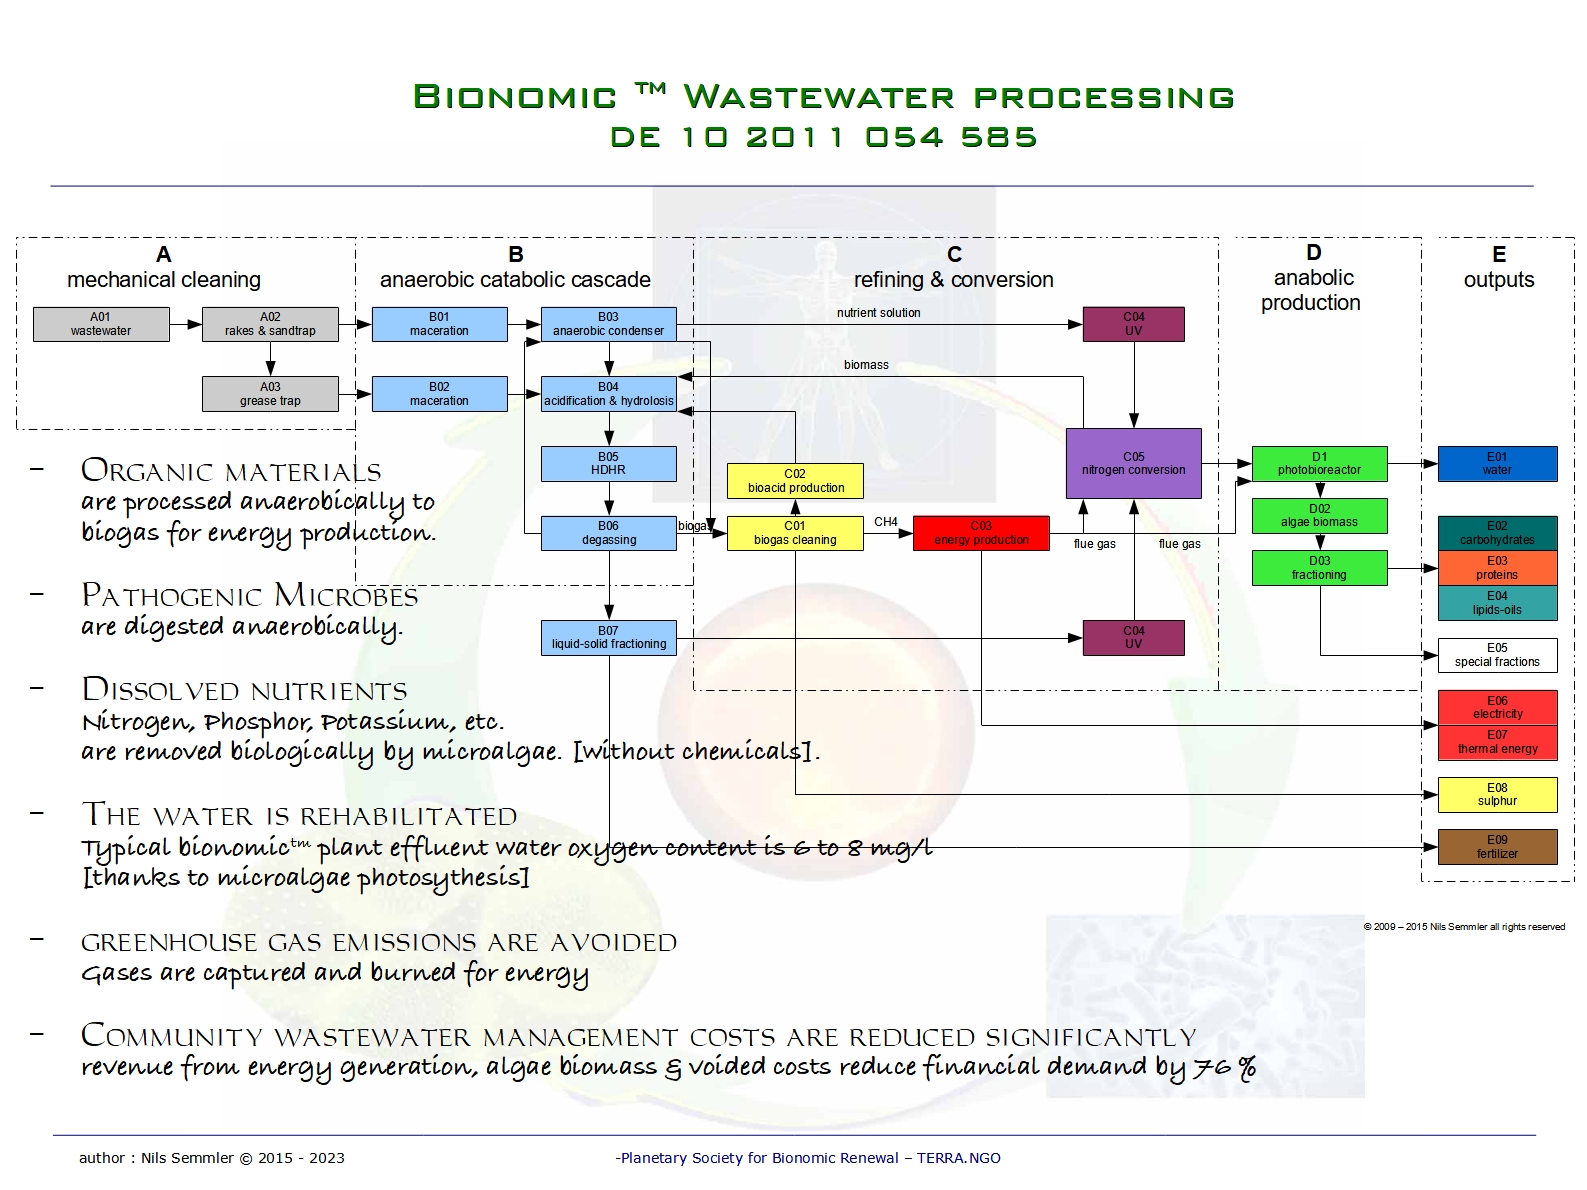 bionomic wastewater processing and rehabilitation